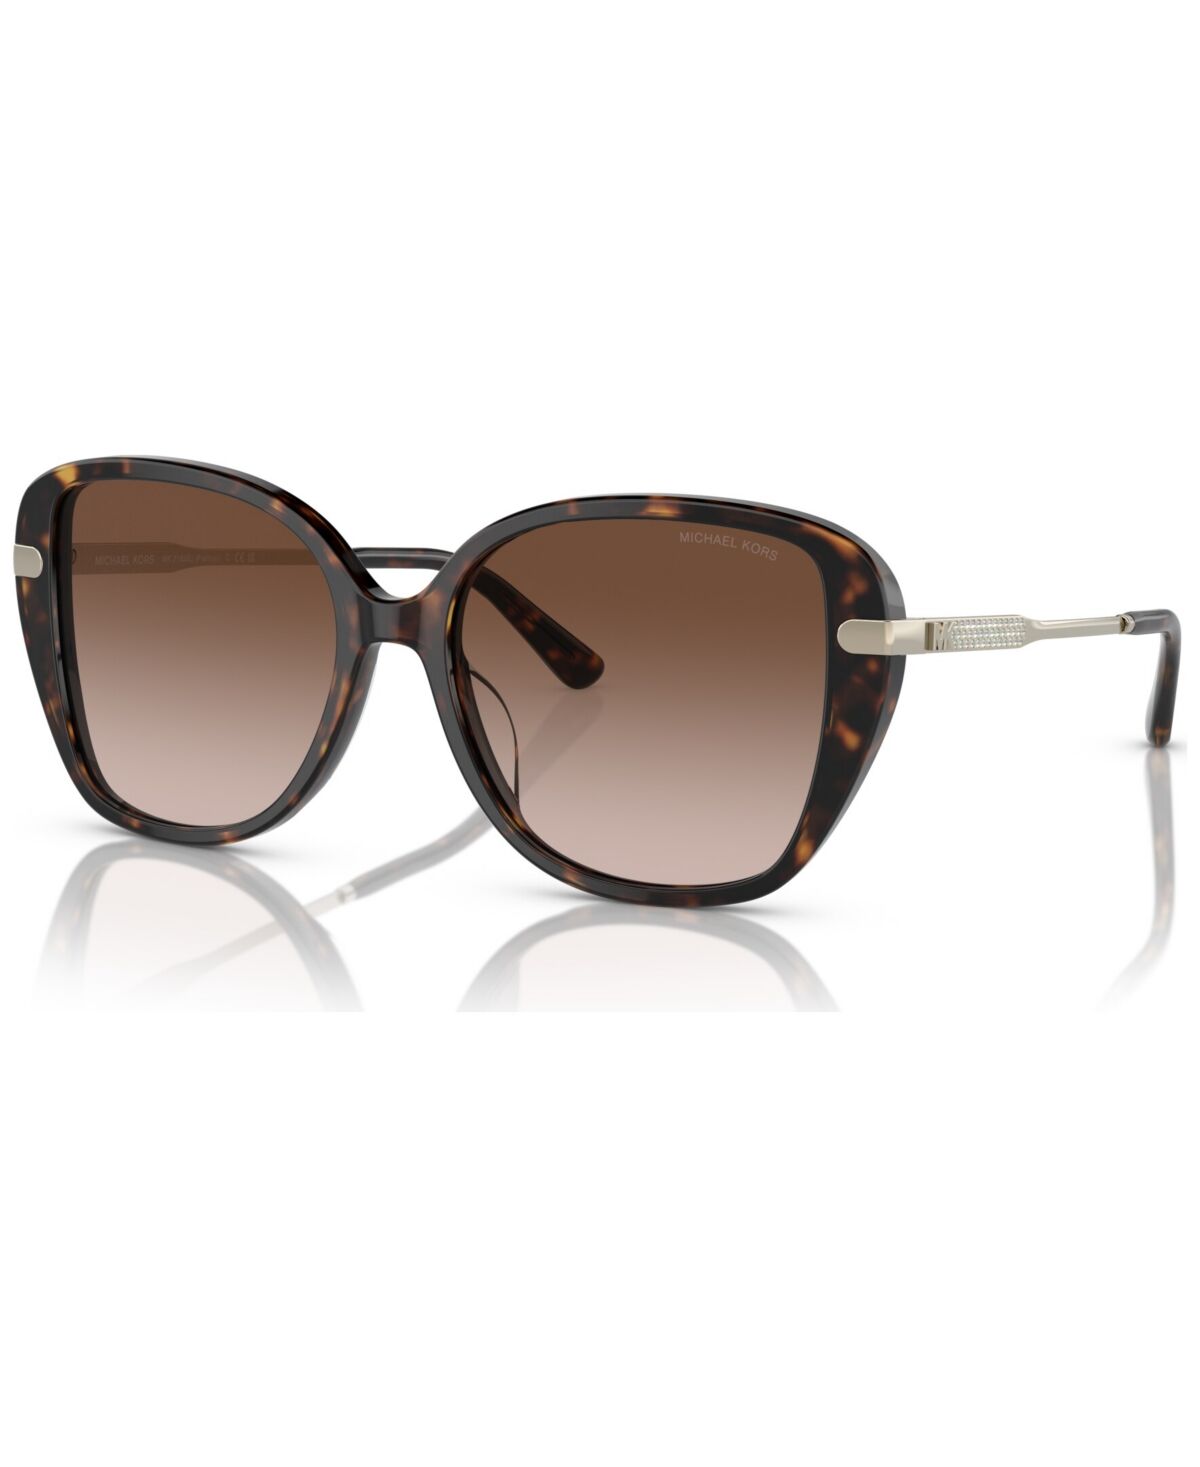 Michael Kors Women's Flatiron Sunglasses, MK2185BU56-y 56 - Dark Tortoise